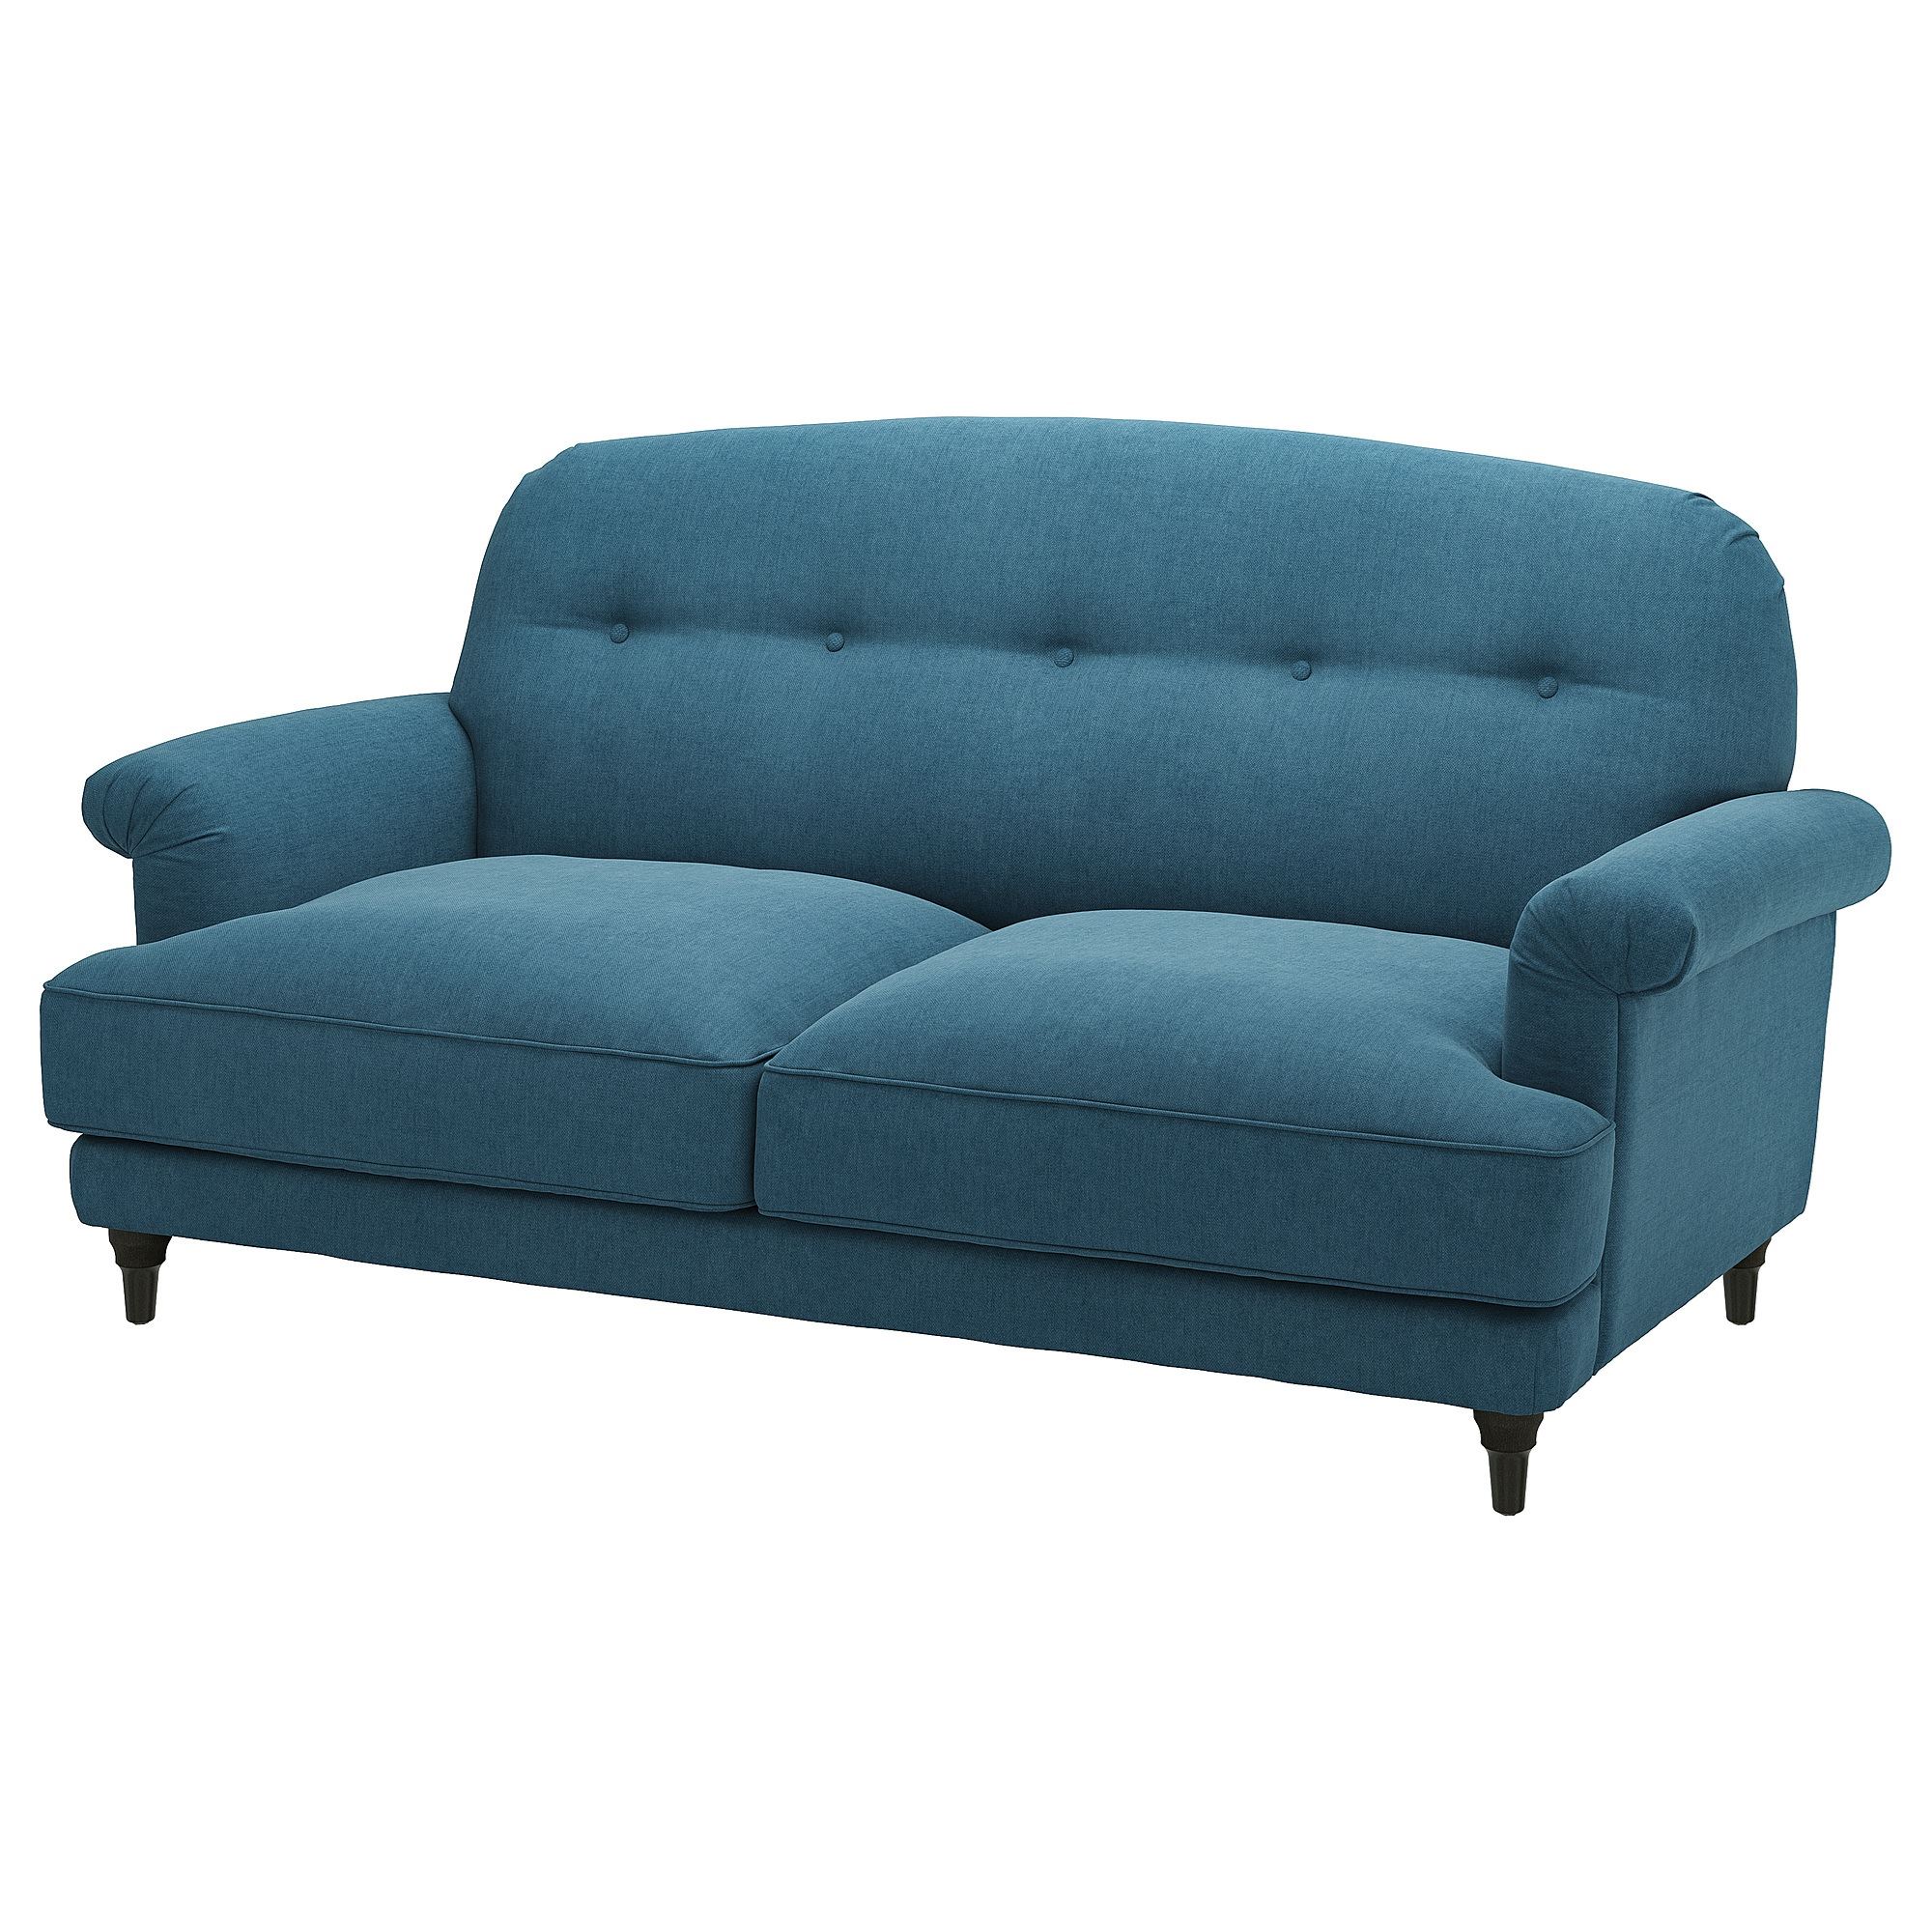 ESSEBODA tallmyra mavi 2'li kanepe | IKEA